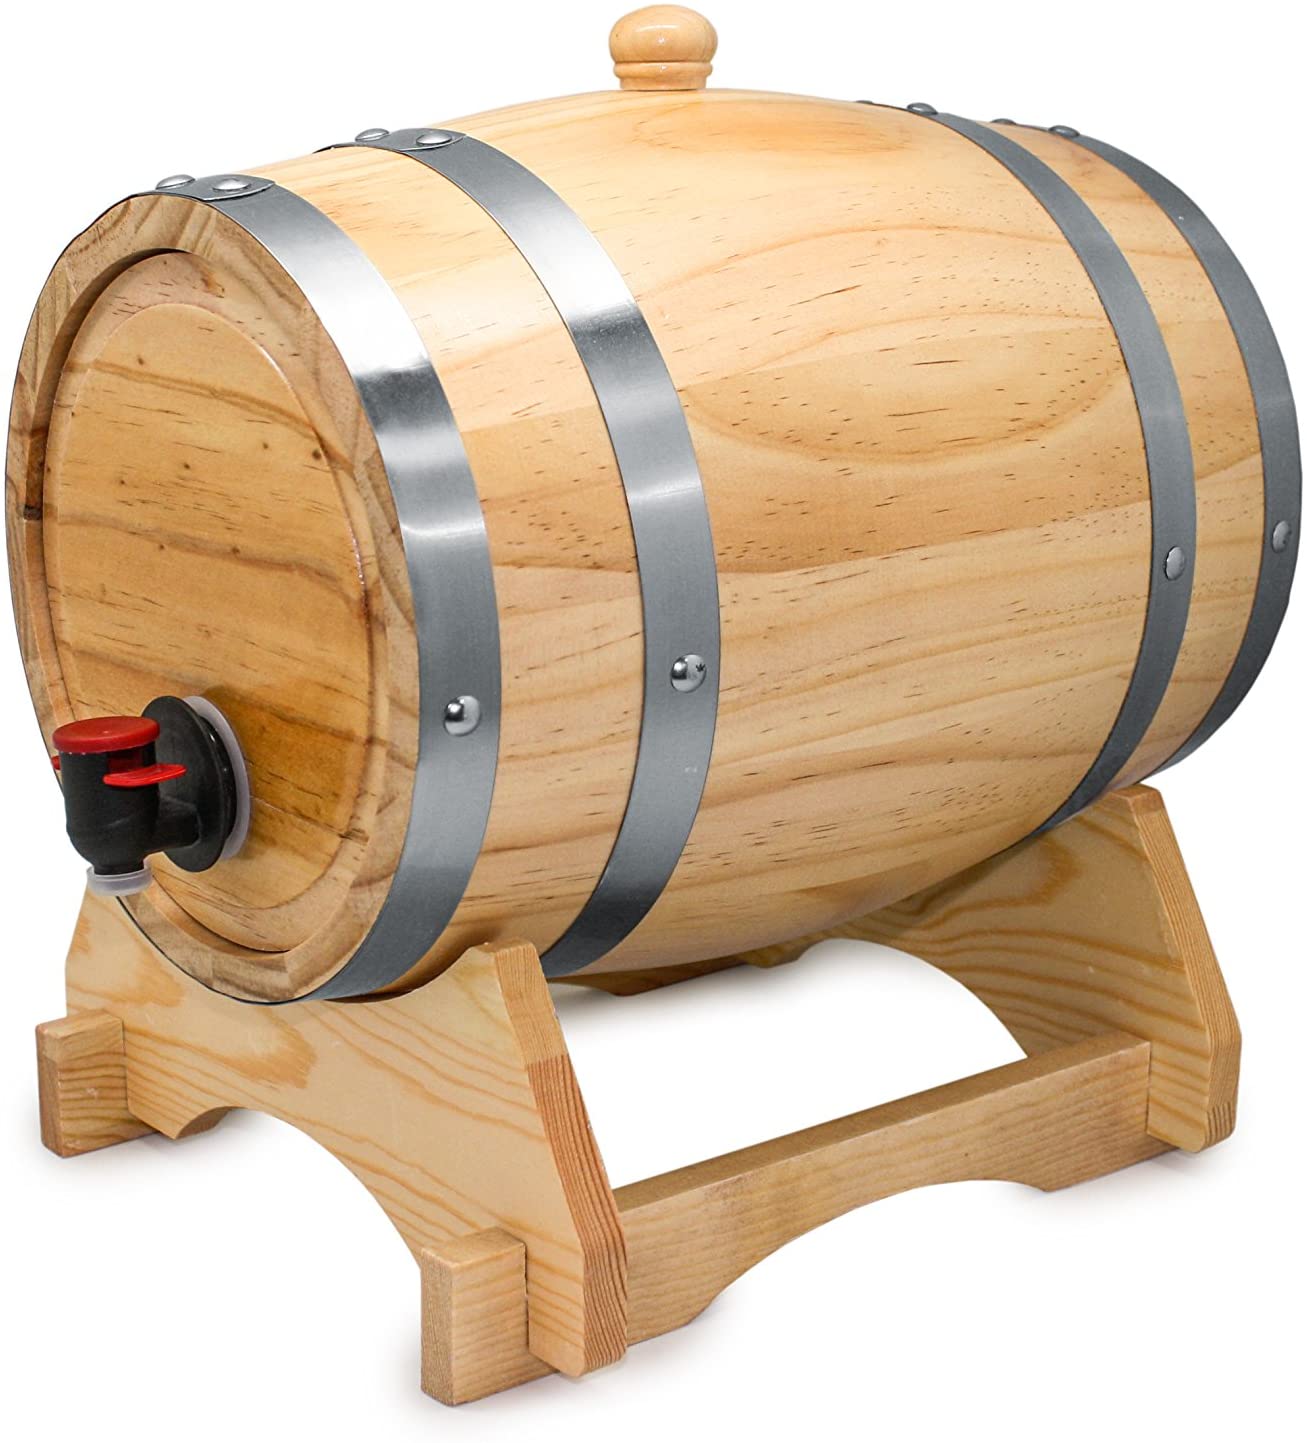 Elige el mejor barril dispensador de vino para tu bodega | DecoBarril.es